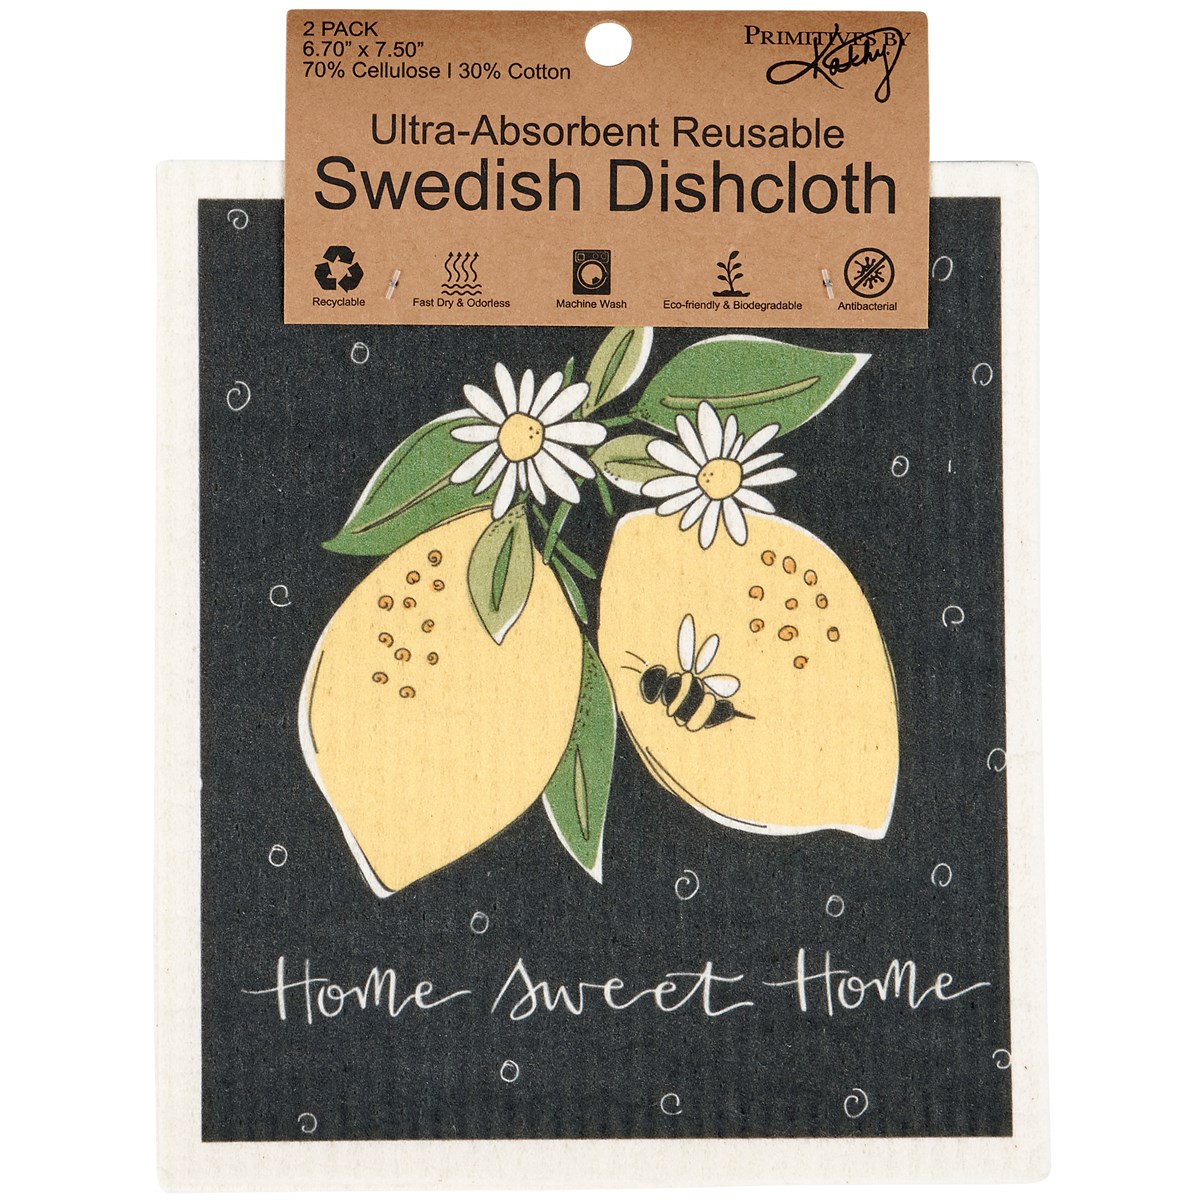 Sweet Home Swedish Dishcloth Set - Cellulose, Cotton